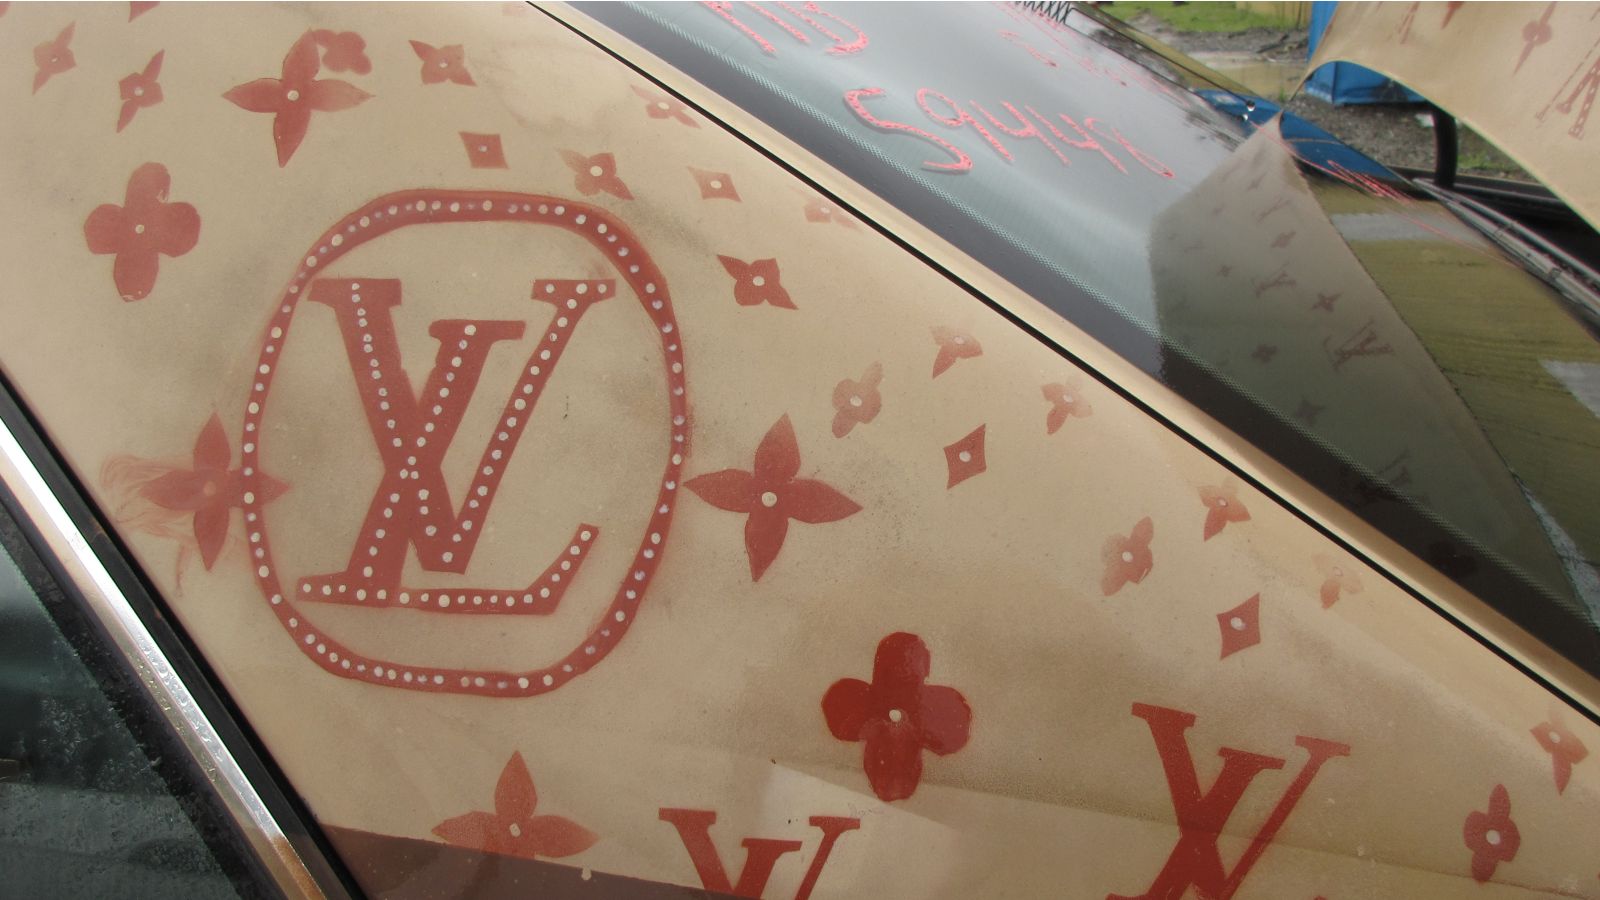 Louis Vuitton Vehicle Wraps - Browse Louis Vuitton Vehicle Wraps